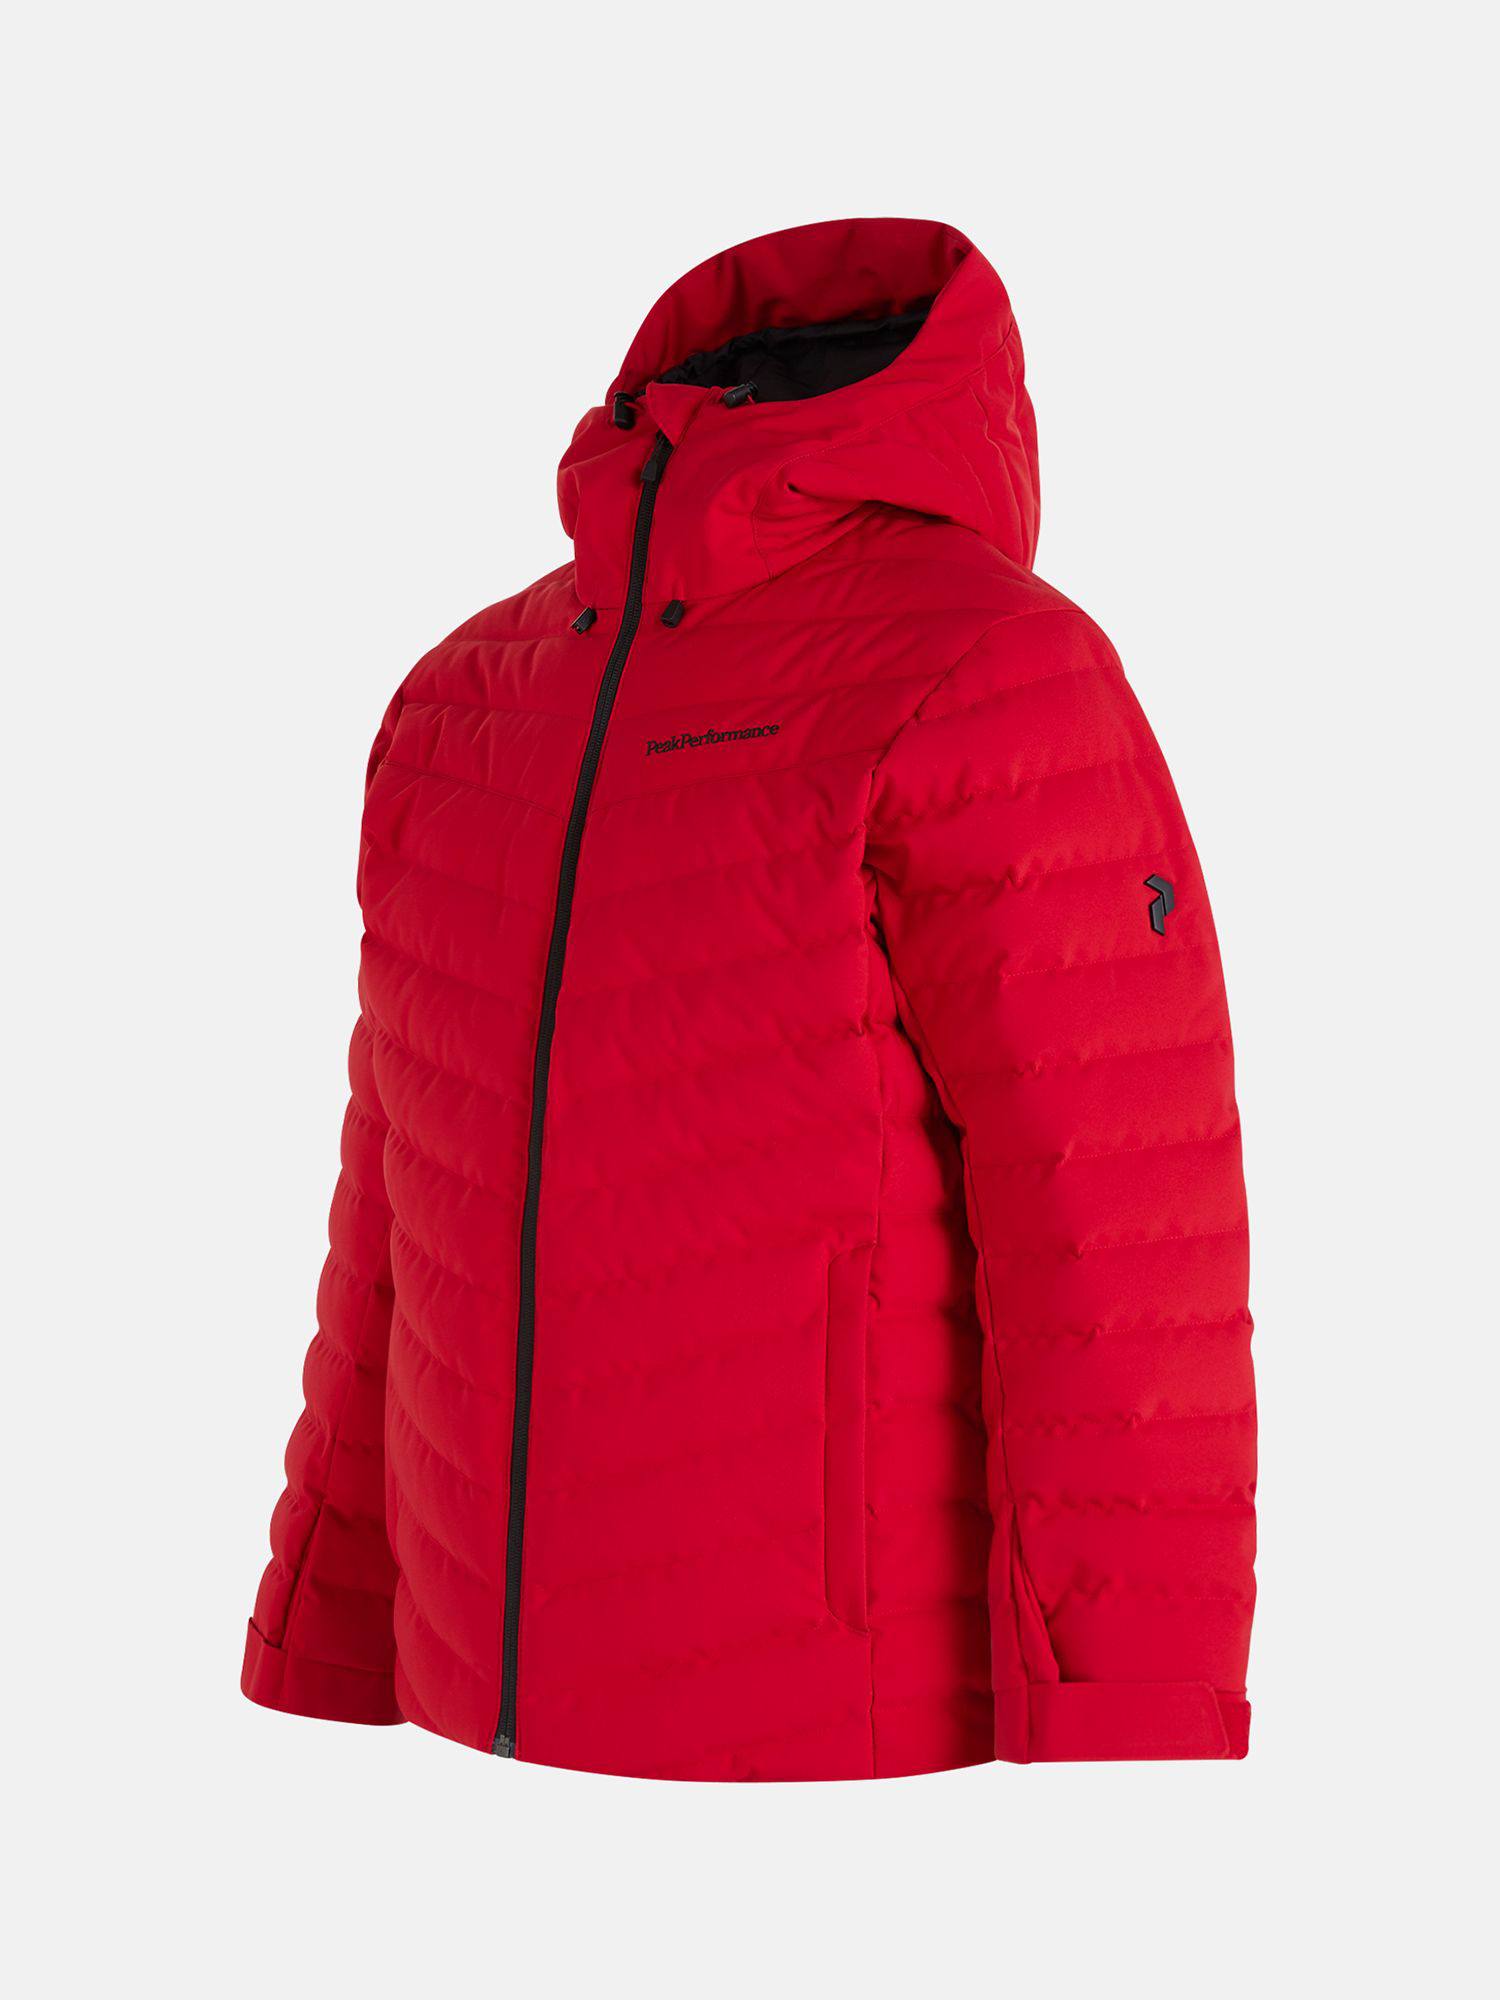 Peak Performance Men’s Frost Ski Jacket Red M